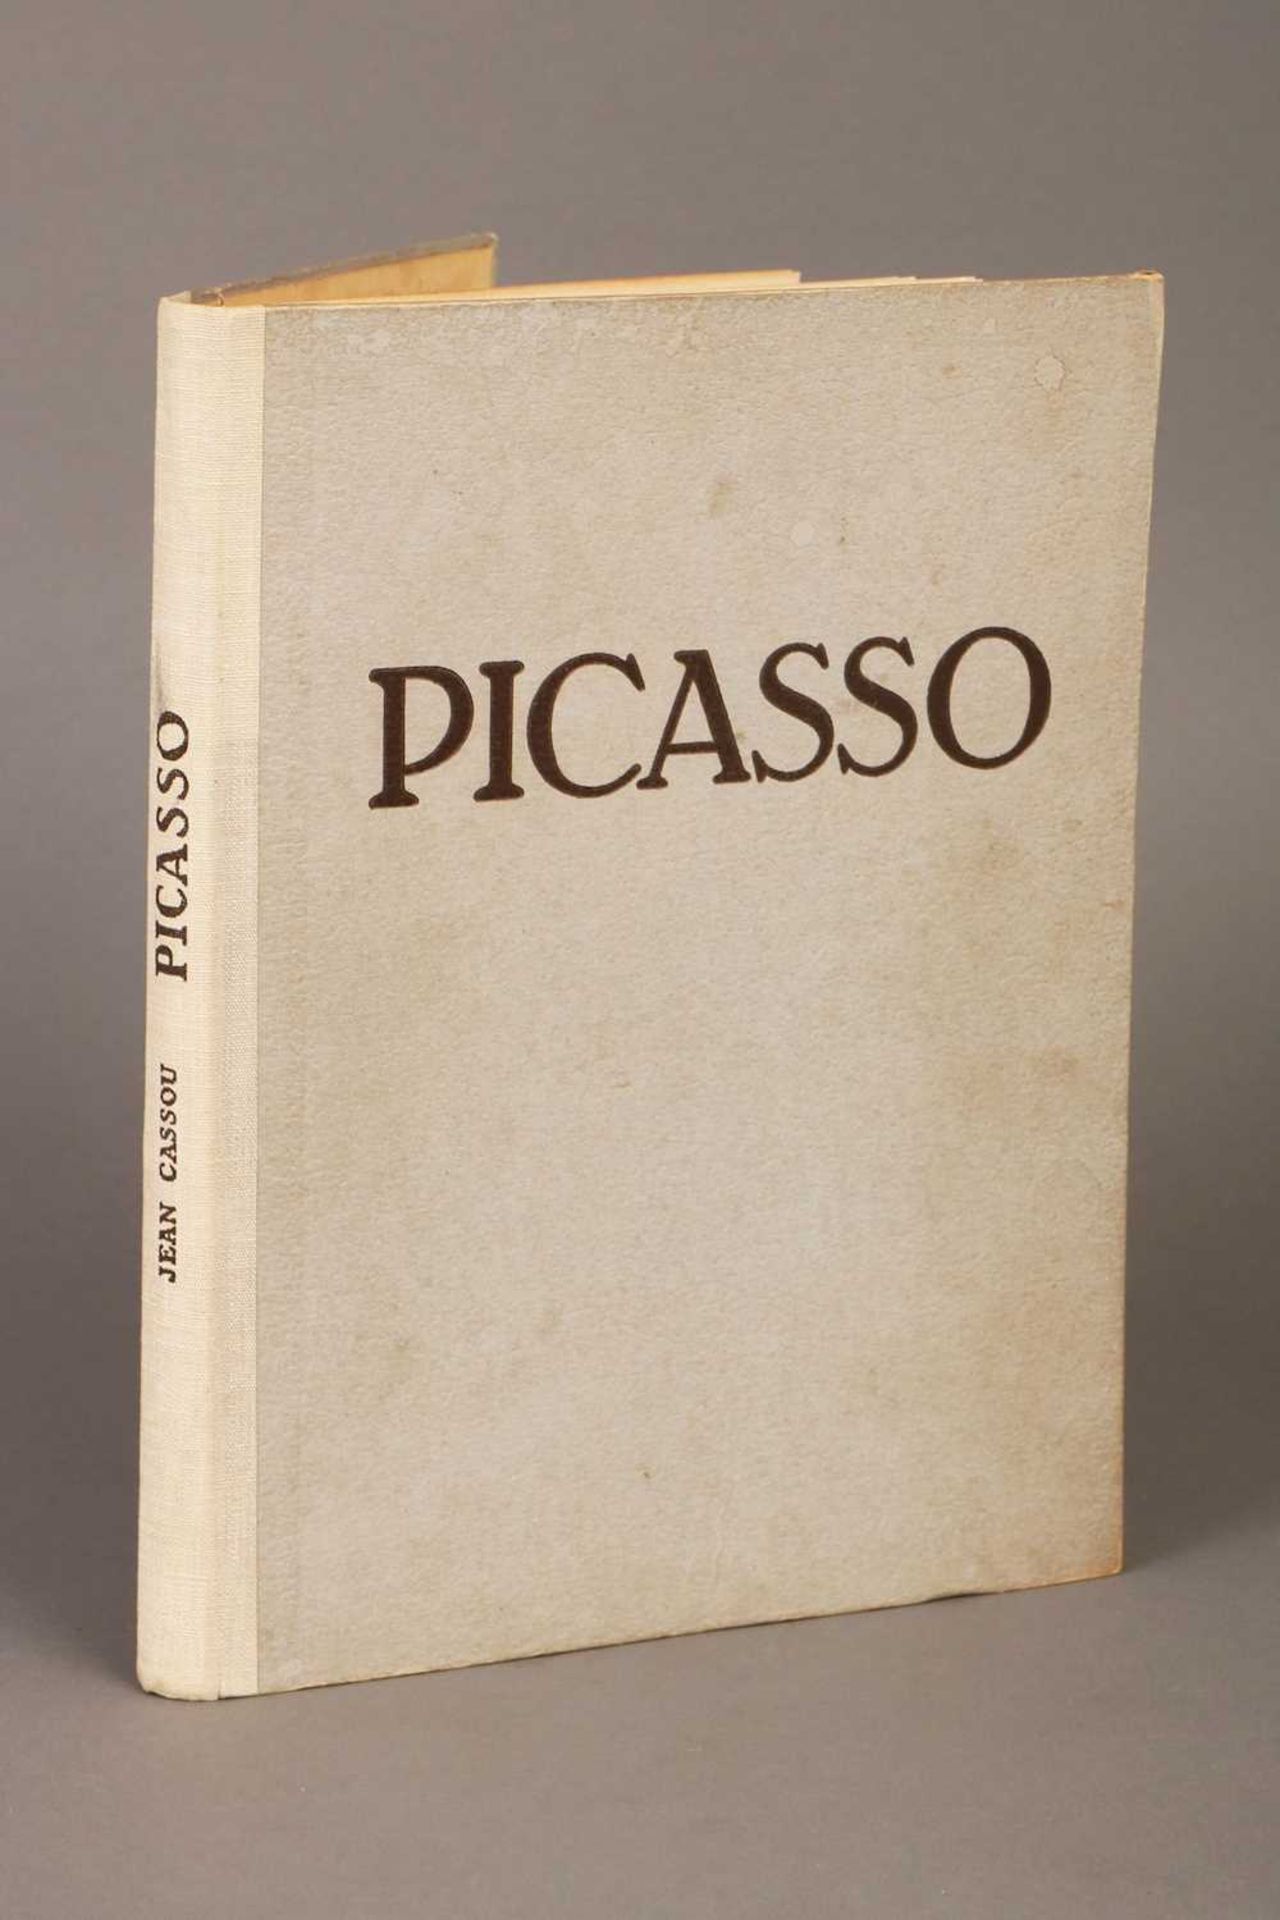 JEAN CASSOU Buch ¨"Picasso" (1940) mit Signatur Picassos - Bild 3 aus 3